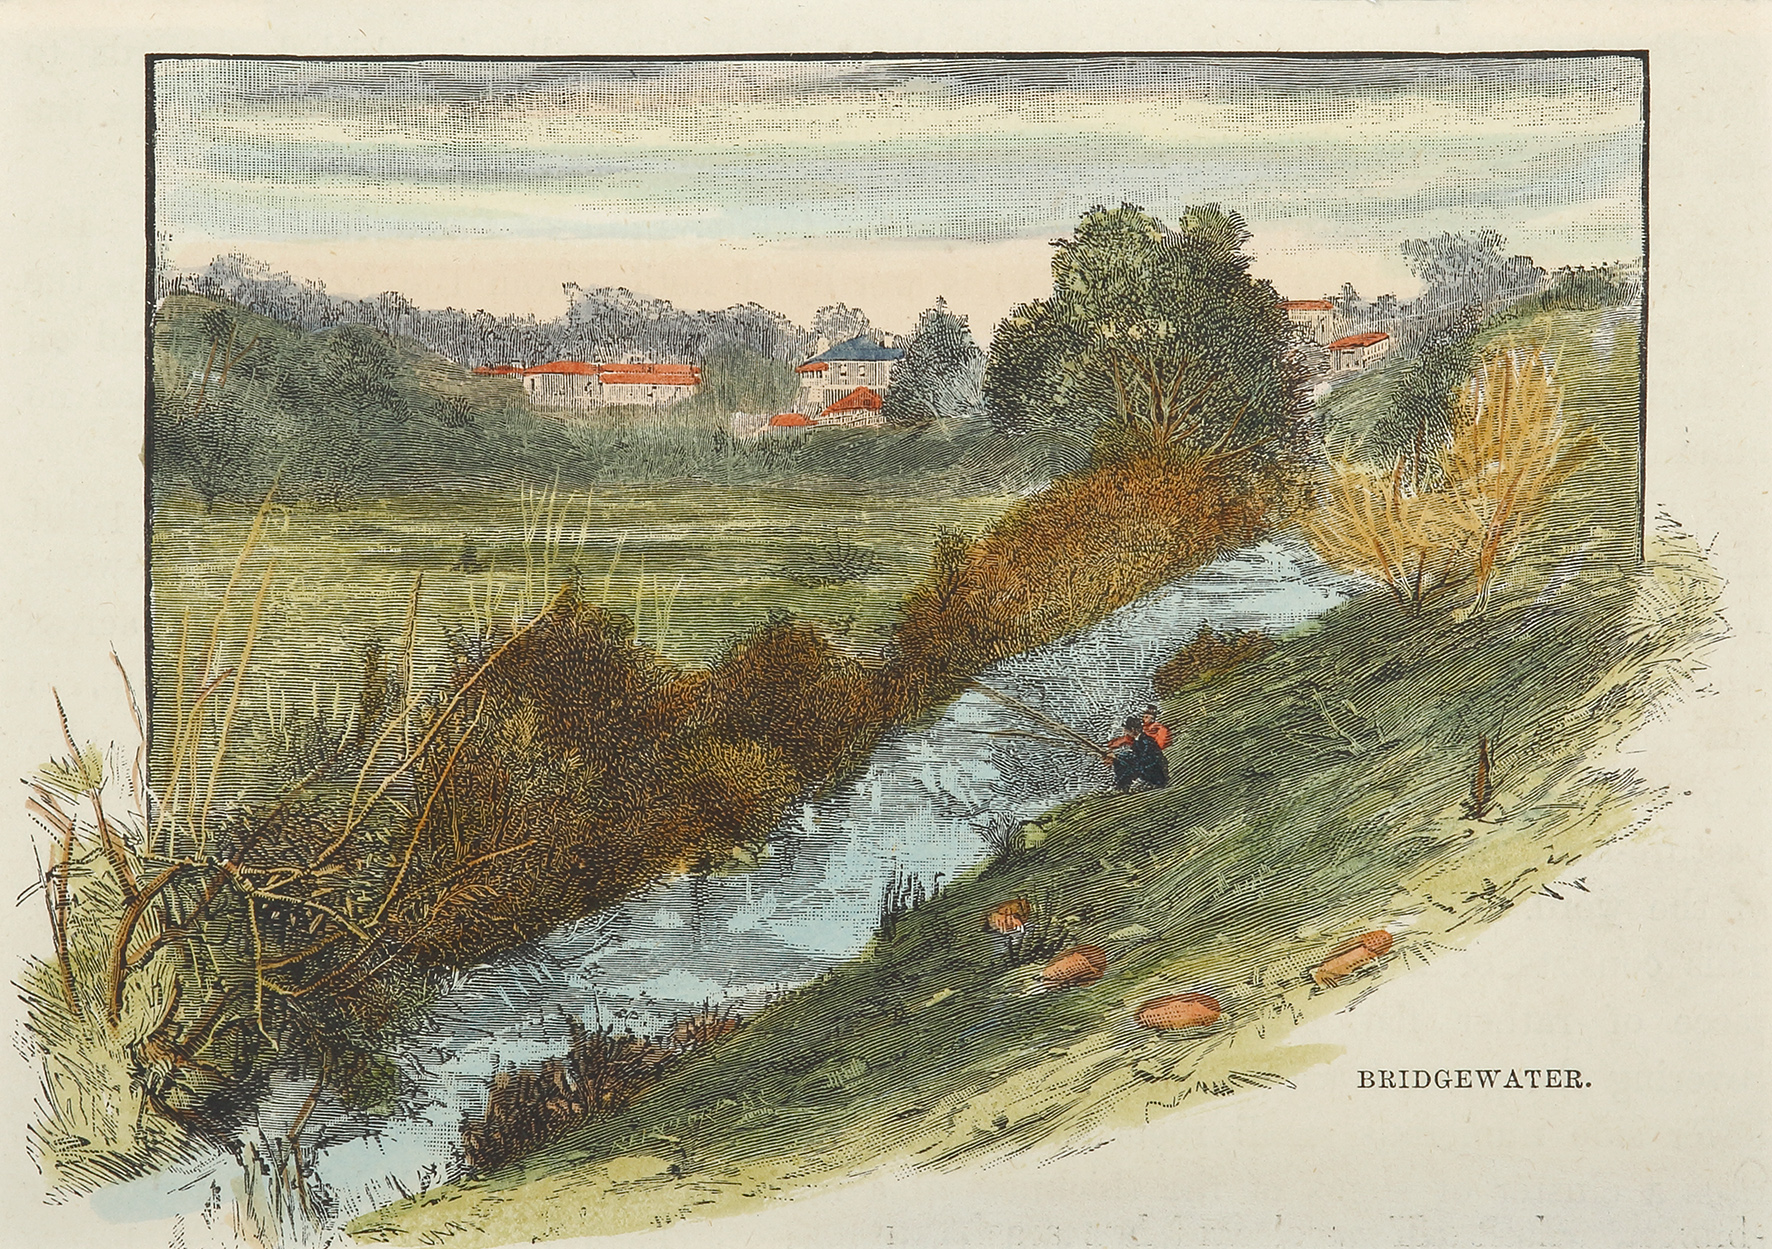 Bridgewater. - Antique Print from 1887